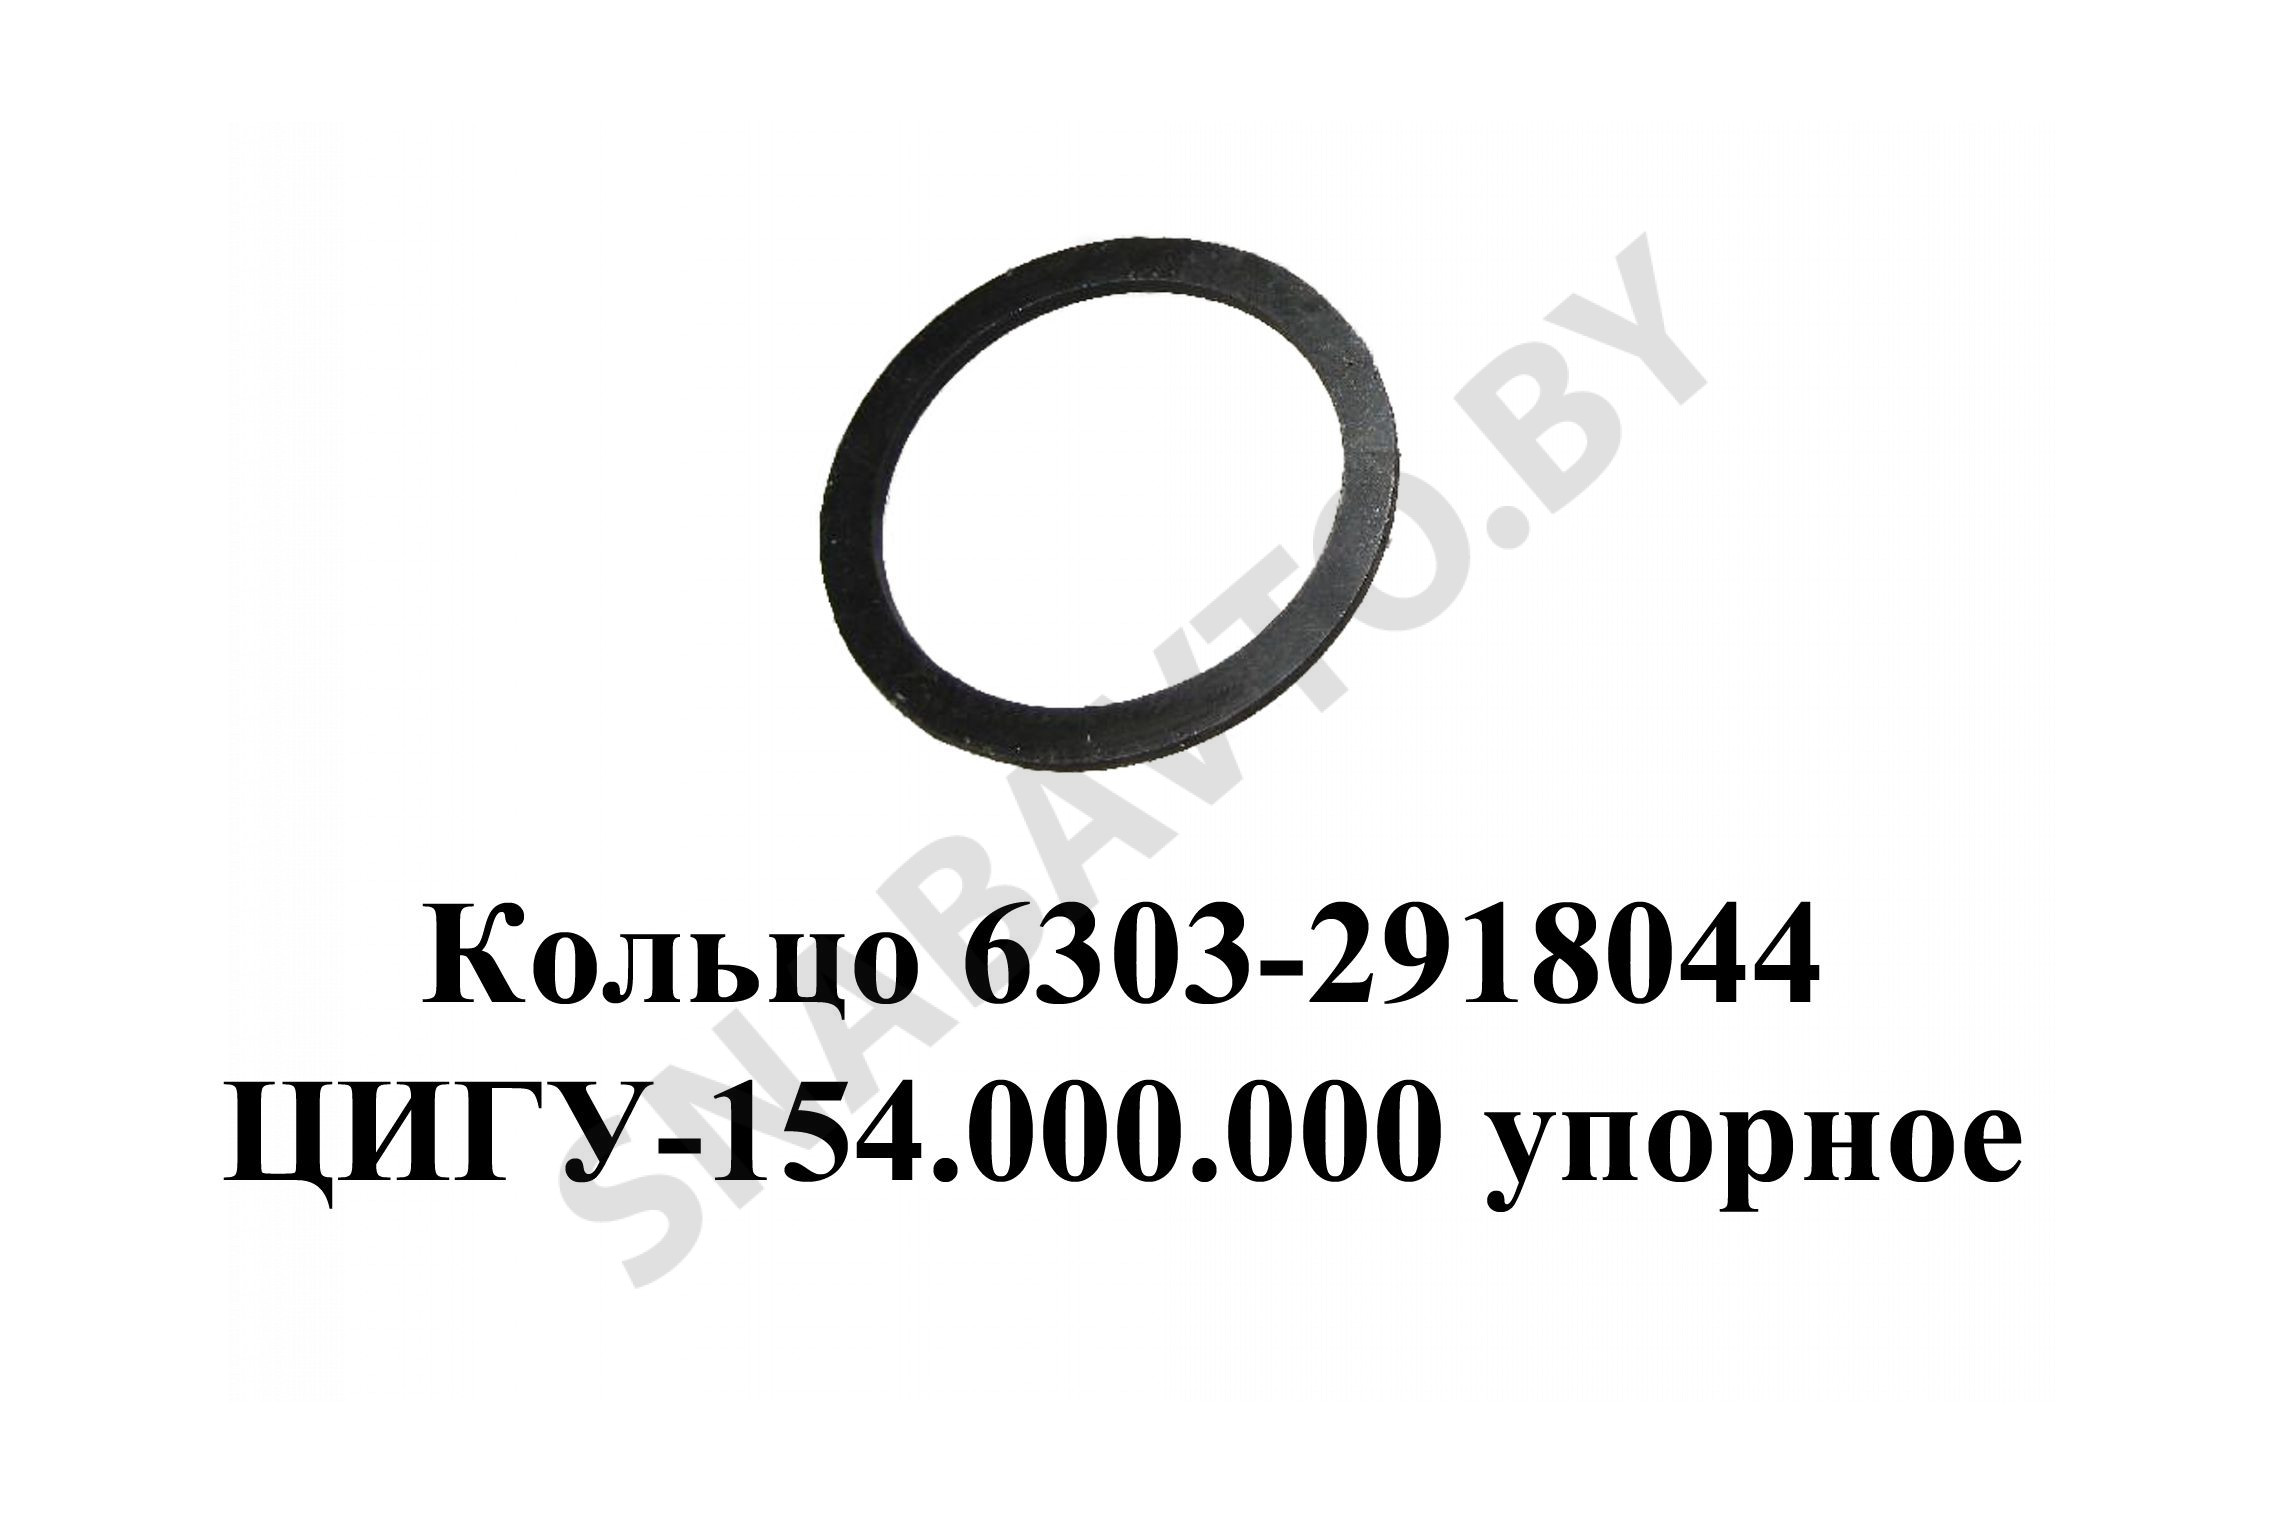 Кольцо ЦИГУ-154.000.000 упорное балансира 6303-2918044, Лайтимет